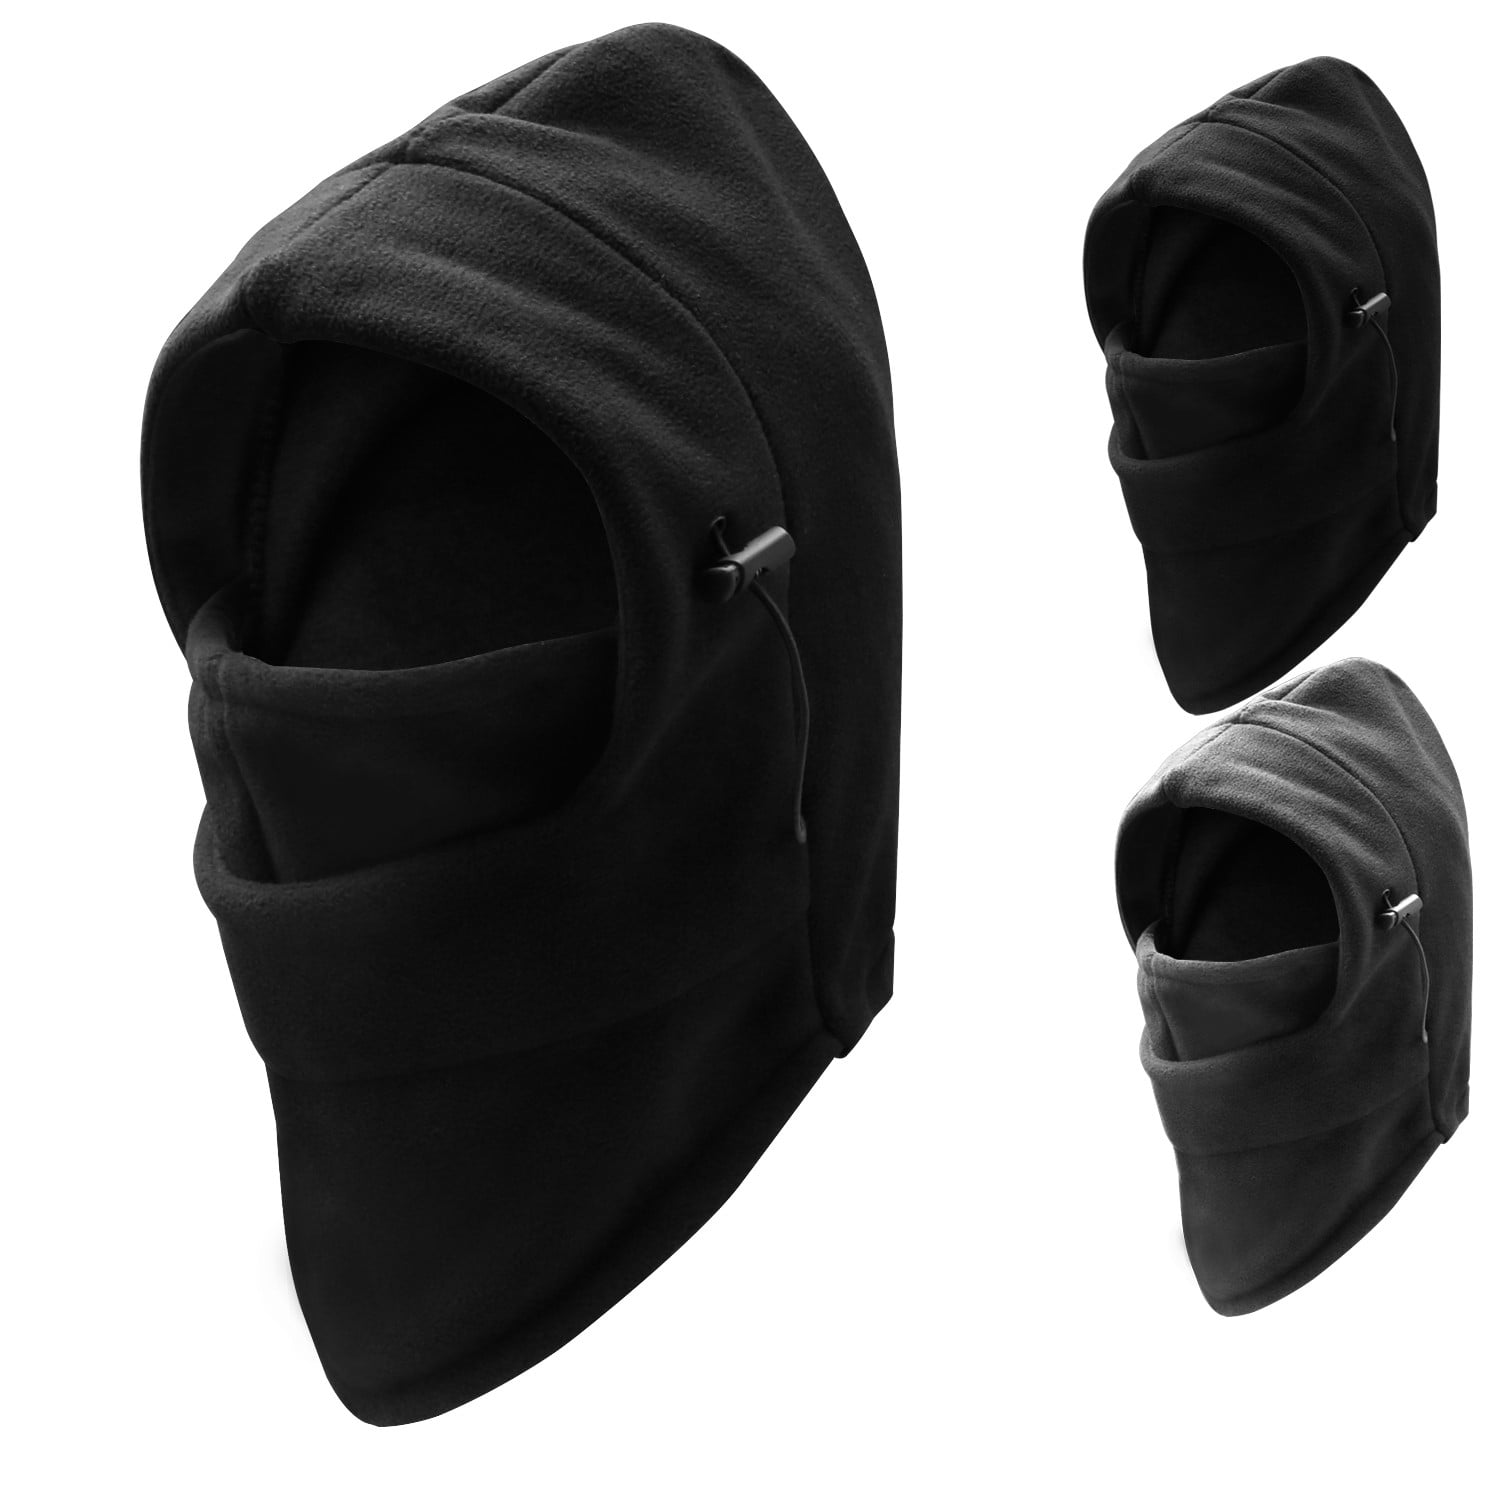 Sleek Ski Helmet Hat - Black - Gray - The Essential Winter Gear - ApolloBox